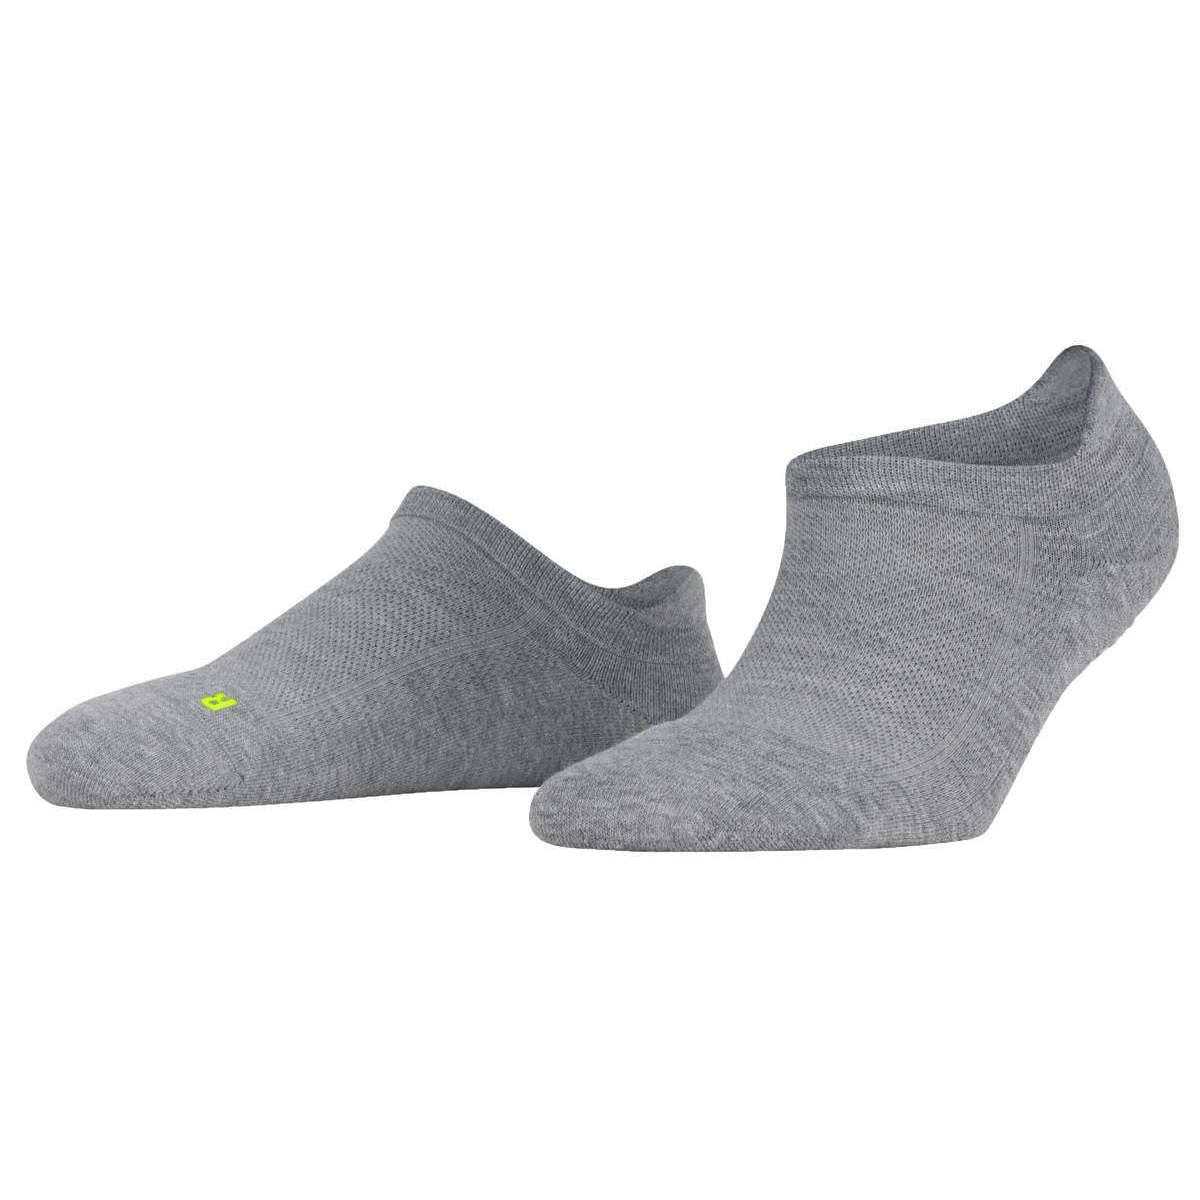 Falke Cool Kick Sneaker Socks - Light Grey Marl - Large - 5.5-7.5 UK | 8-9.5 US | 39-41 EUR